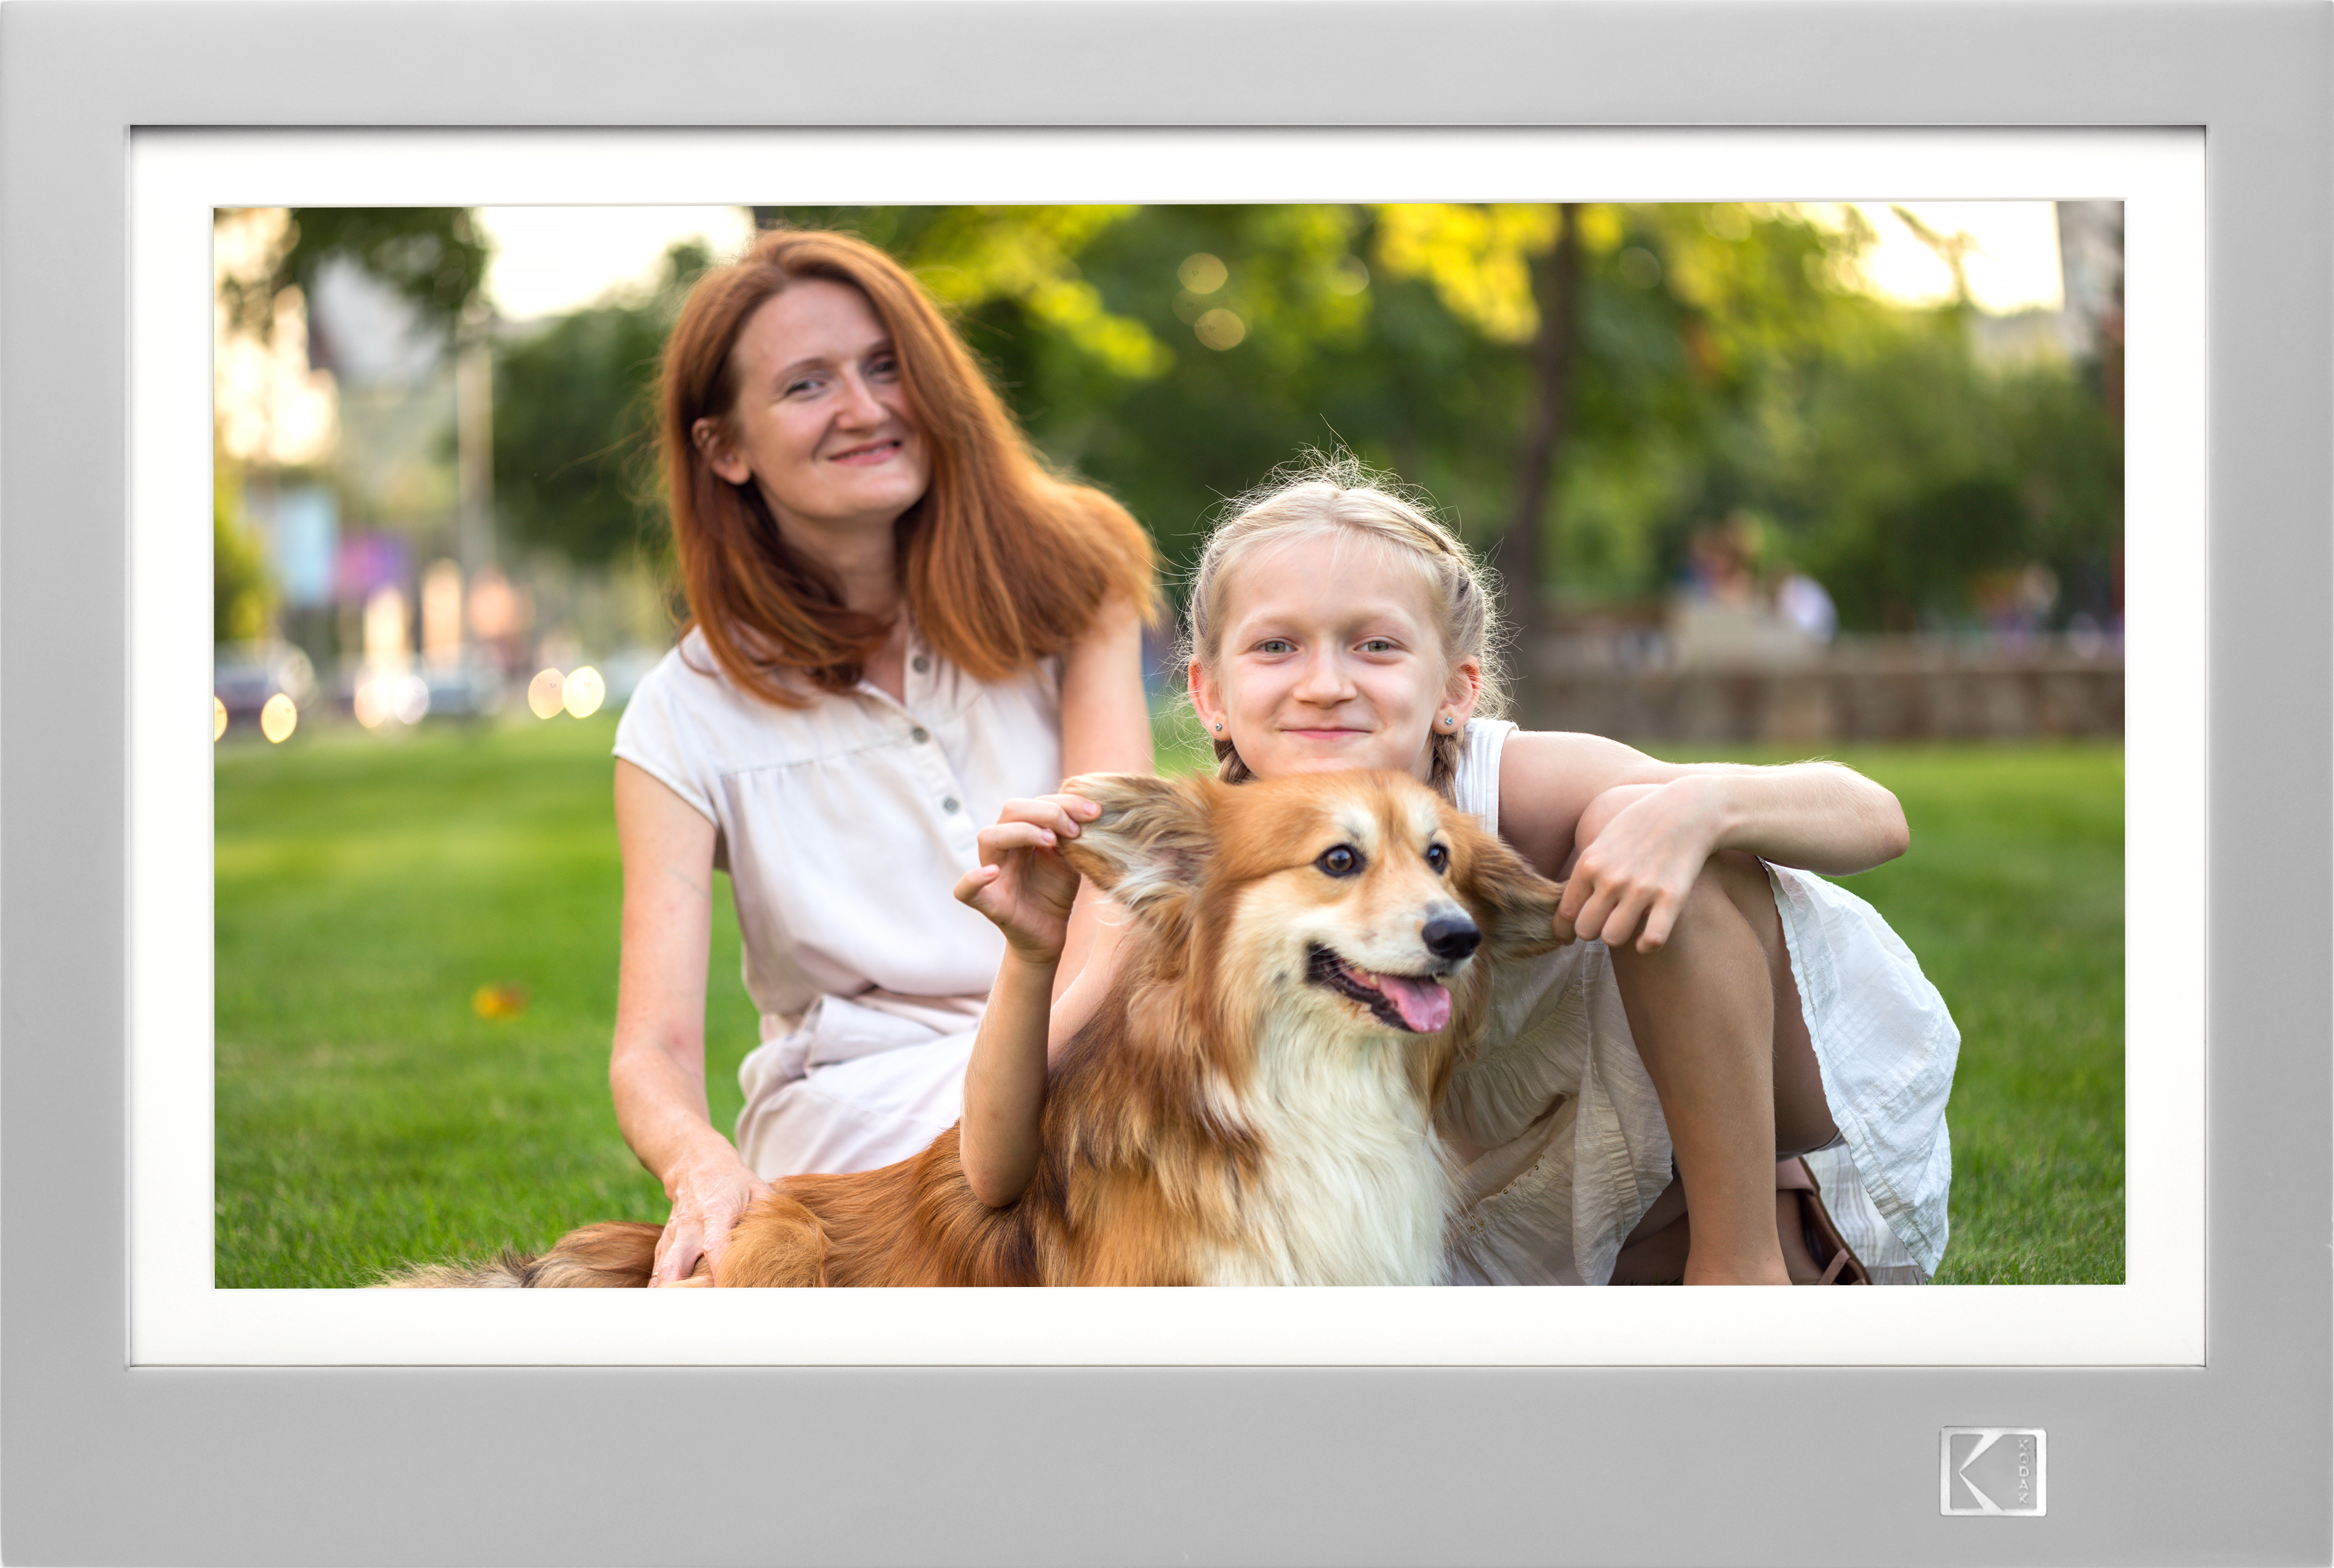 KODAK 11.6-inch Full HD Digital Photo Frame, Wi-Fi Enabled With 32GB Internal Memory, Auto Rotate, Light Sensor, Music, Video, Calendar and Weather Display RWF-116 (Grey Wood)